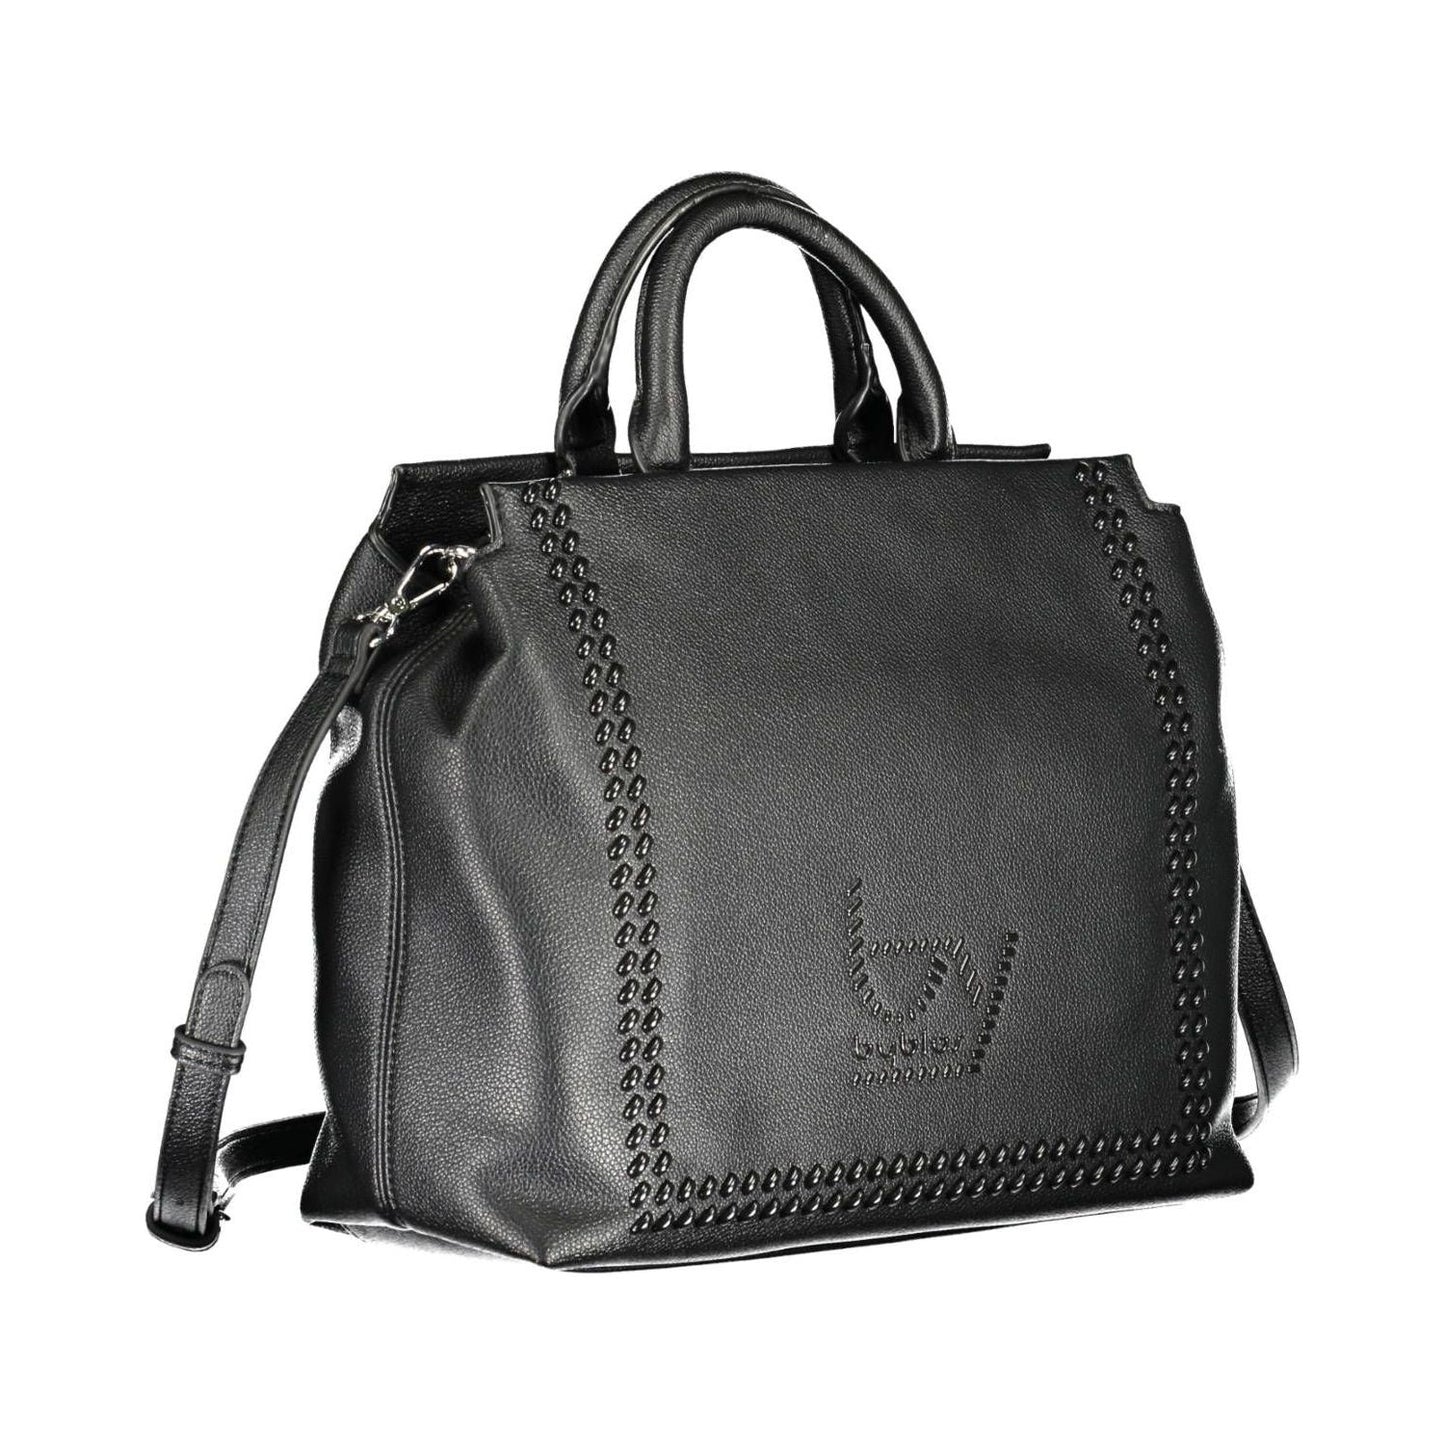 BYBLOS Elegant Two-Handle Black Handbag with Contrasting Details elegant-two-handle-black-handbag-with-contrasting-details